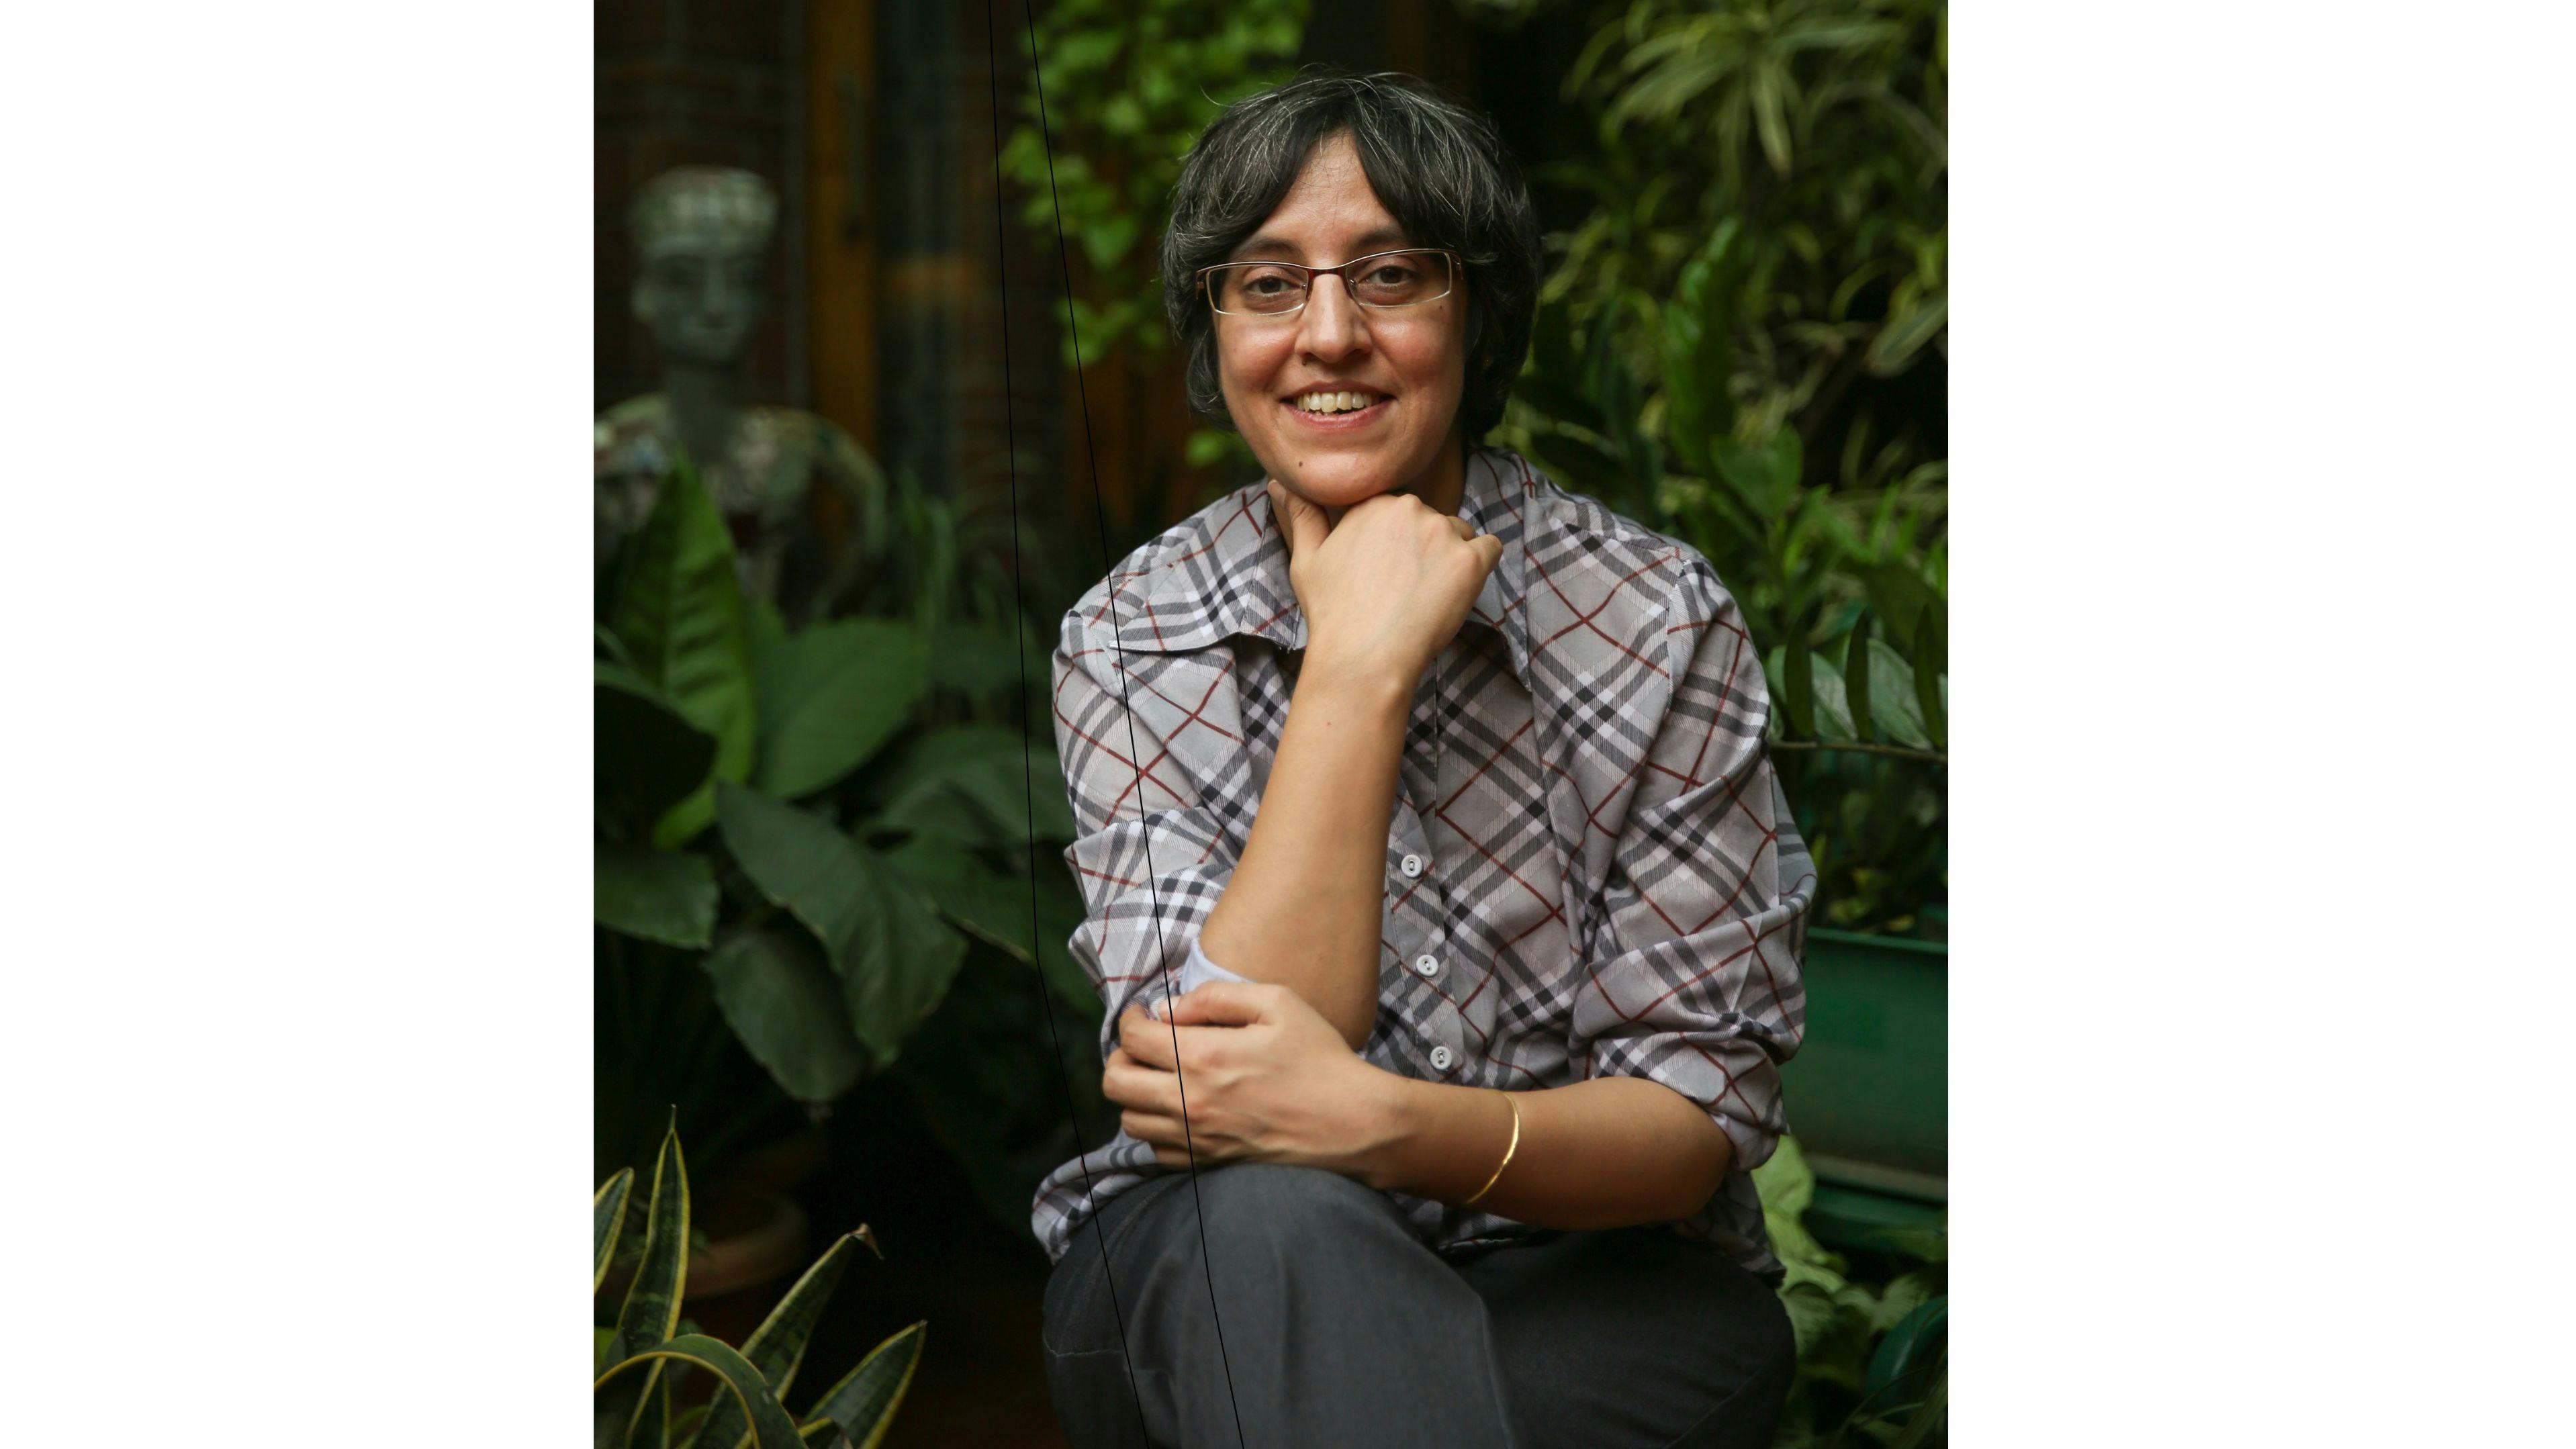 Author Parvati Sharma